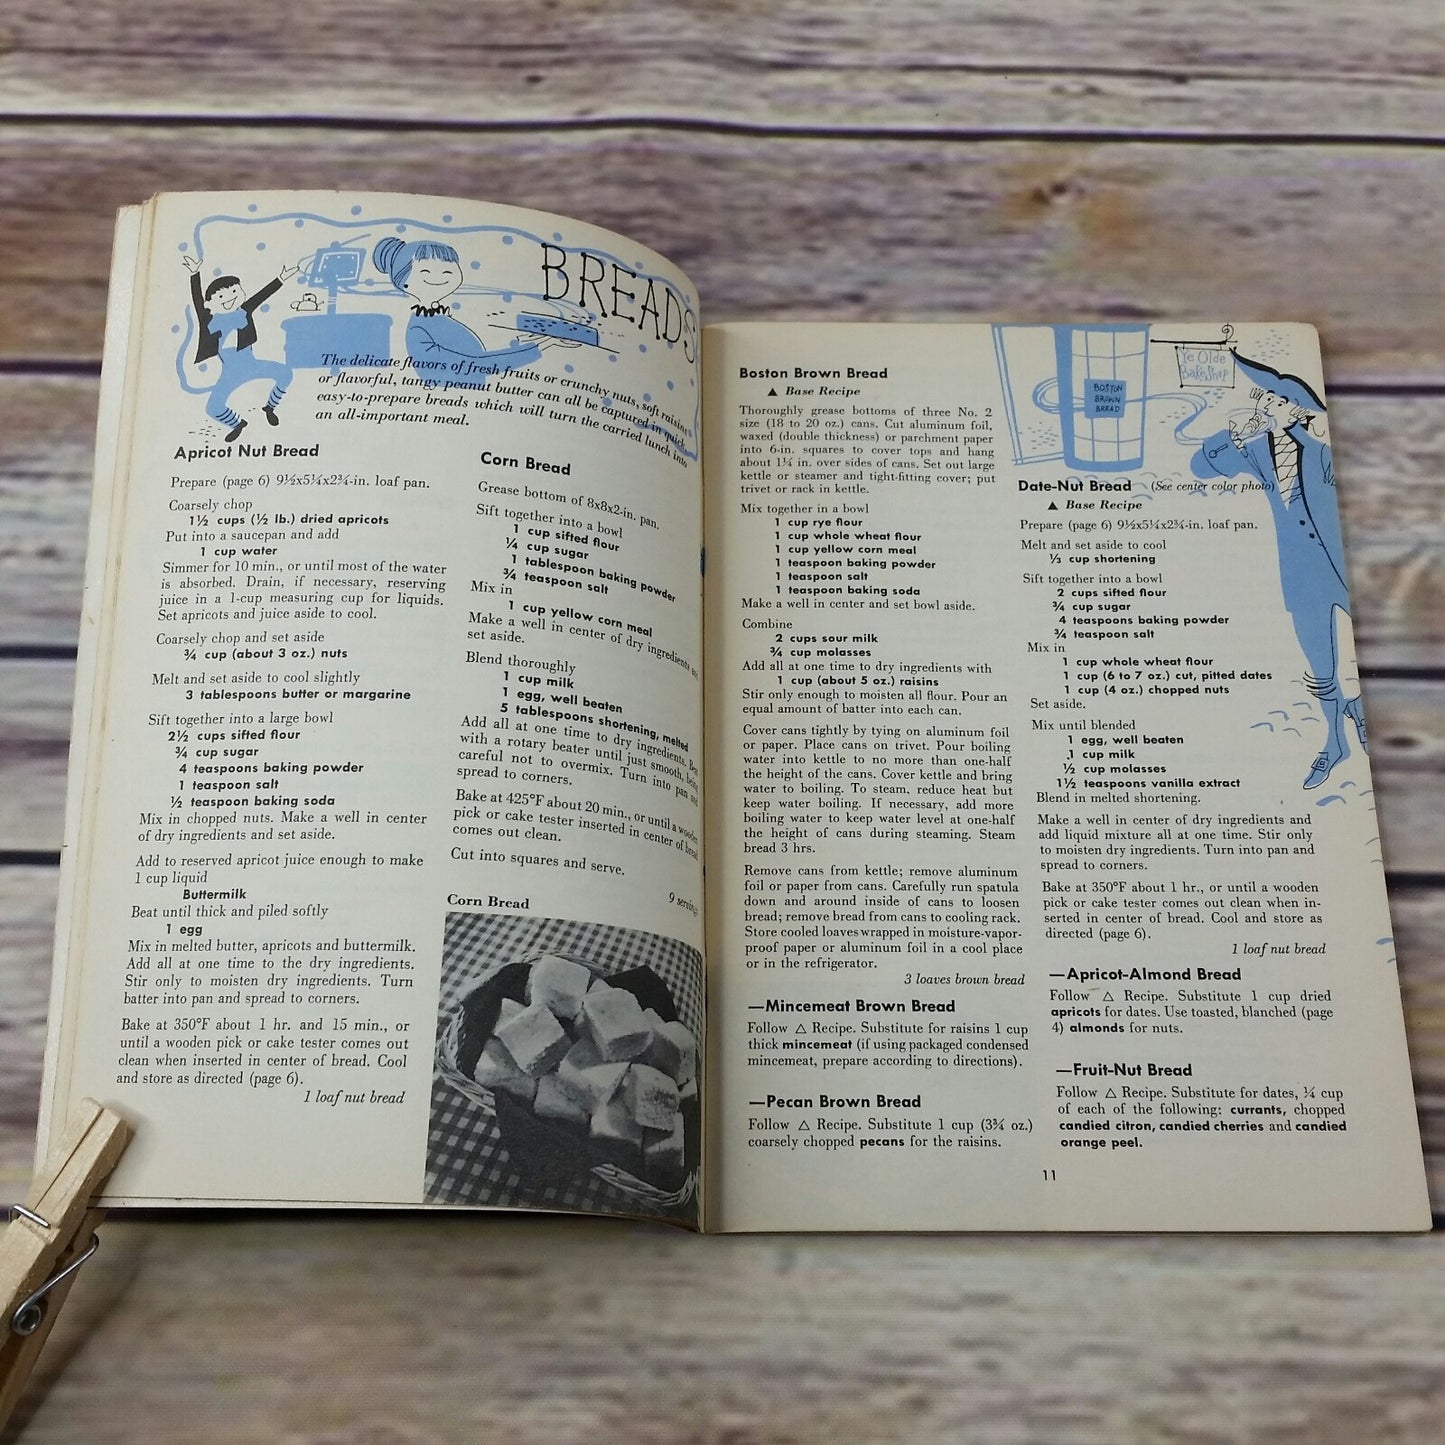 Vintage Cookbook Culinary Arts Institute Lunch Box Recipes 1954 Melanie De Proft - At Grandma's Table